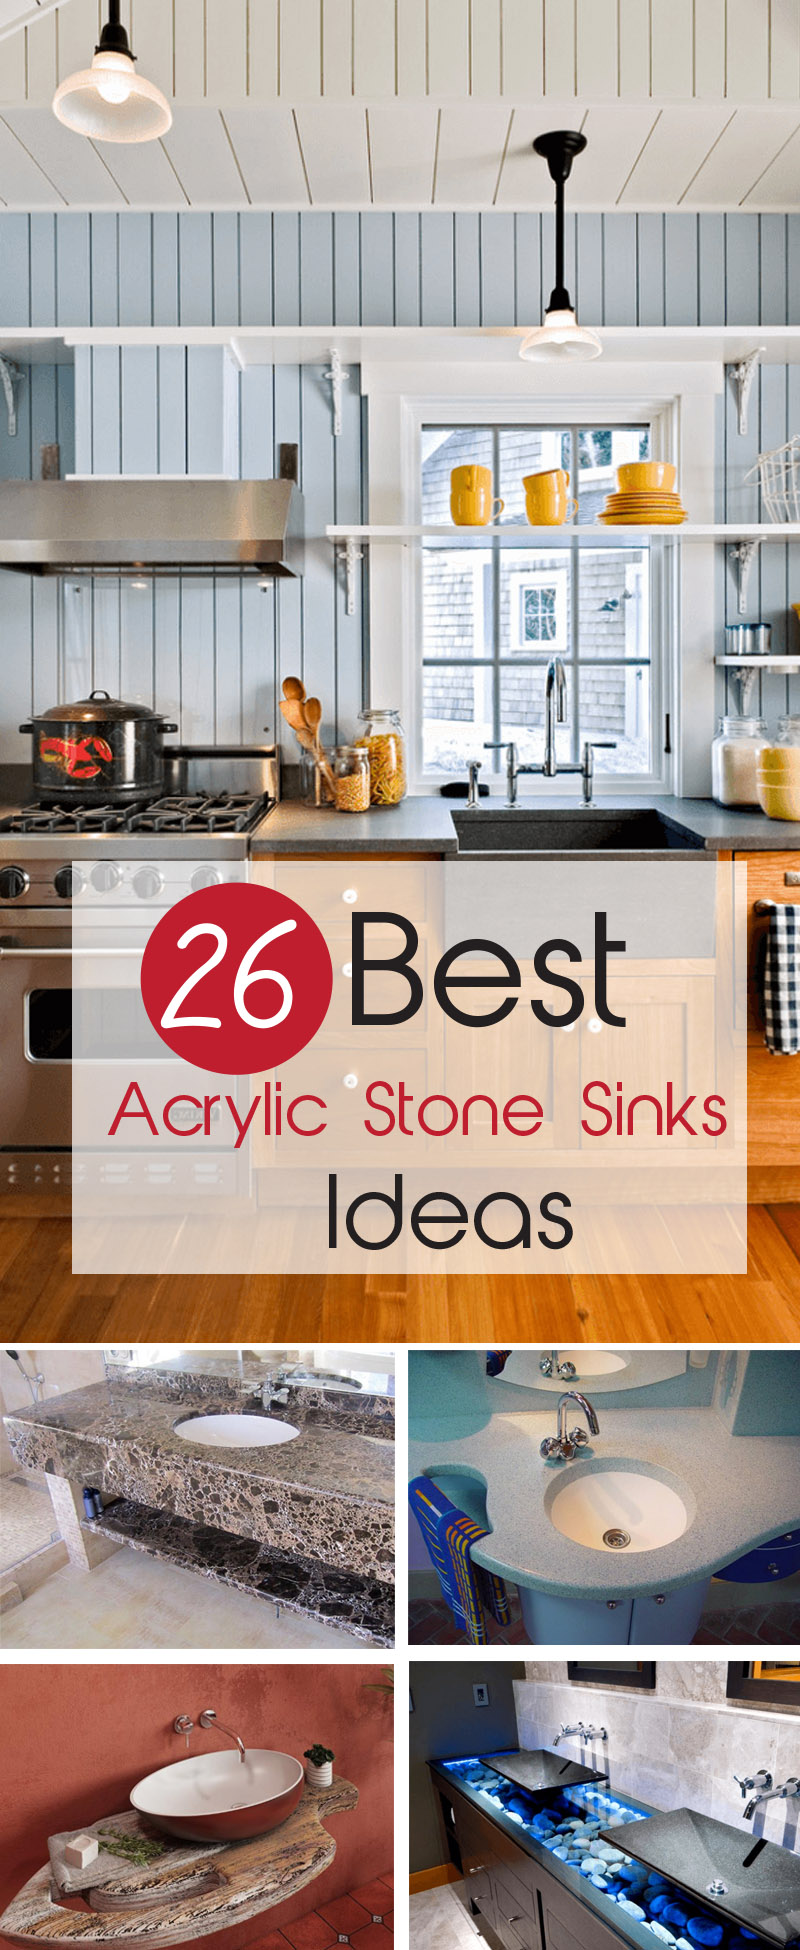 Acrylic Stone Sinks Ideas